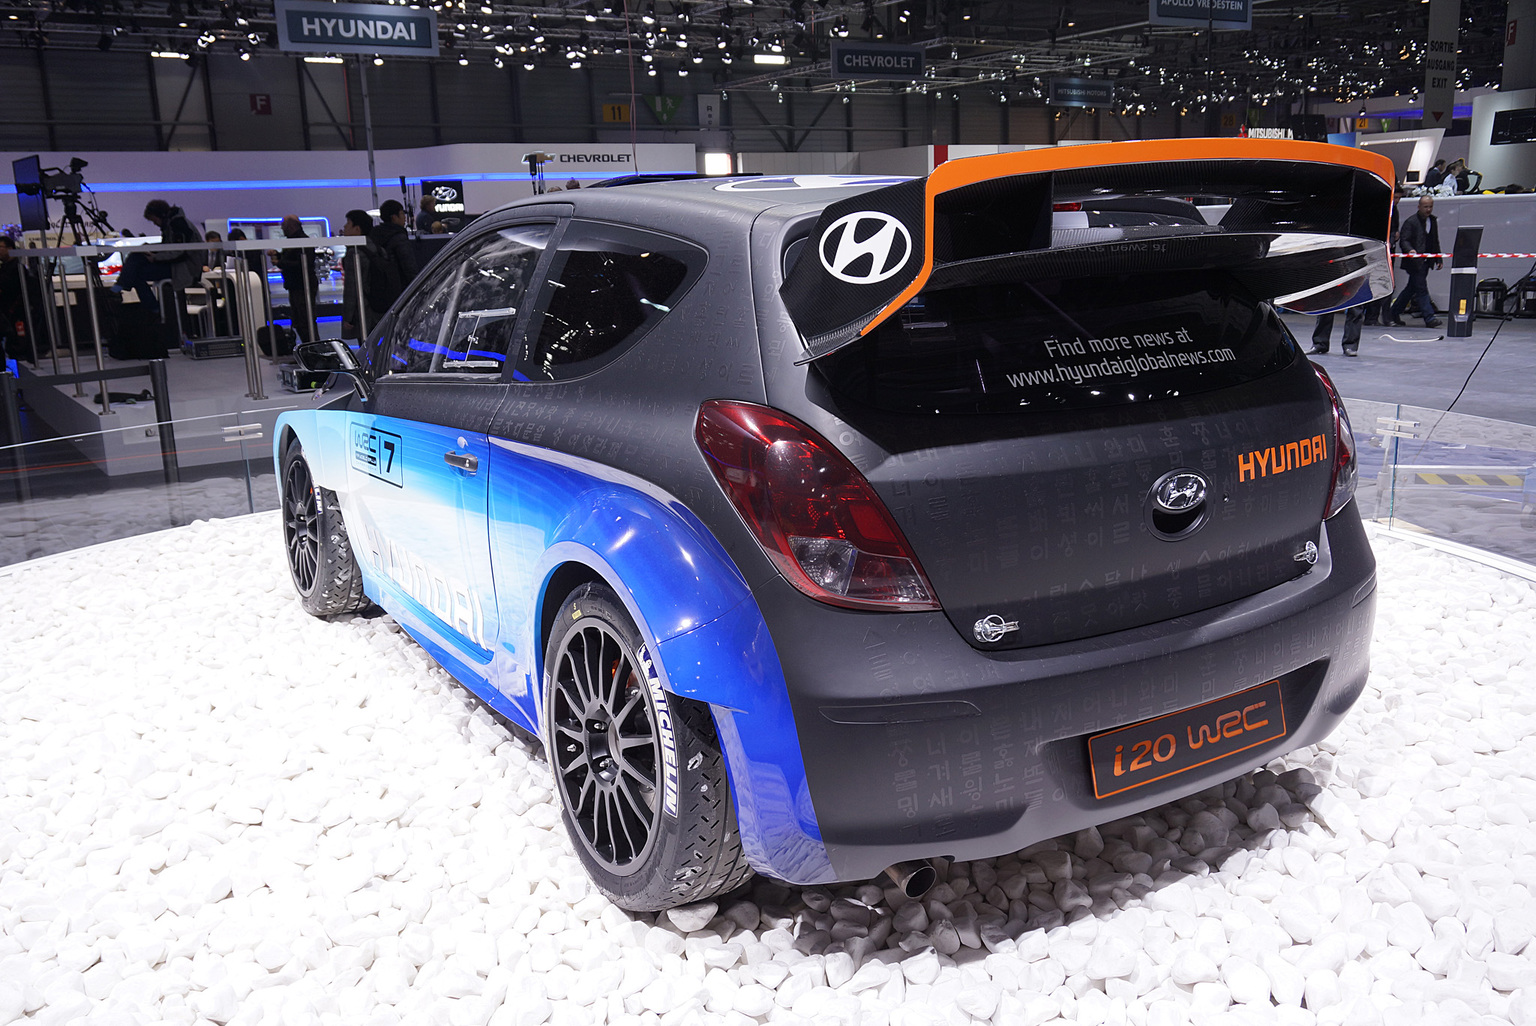 2013 Hyundai i20 WRC Showcar